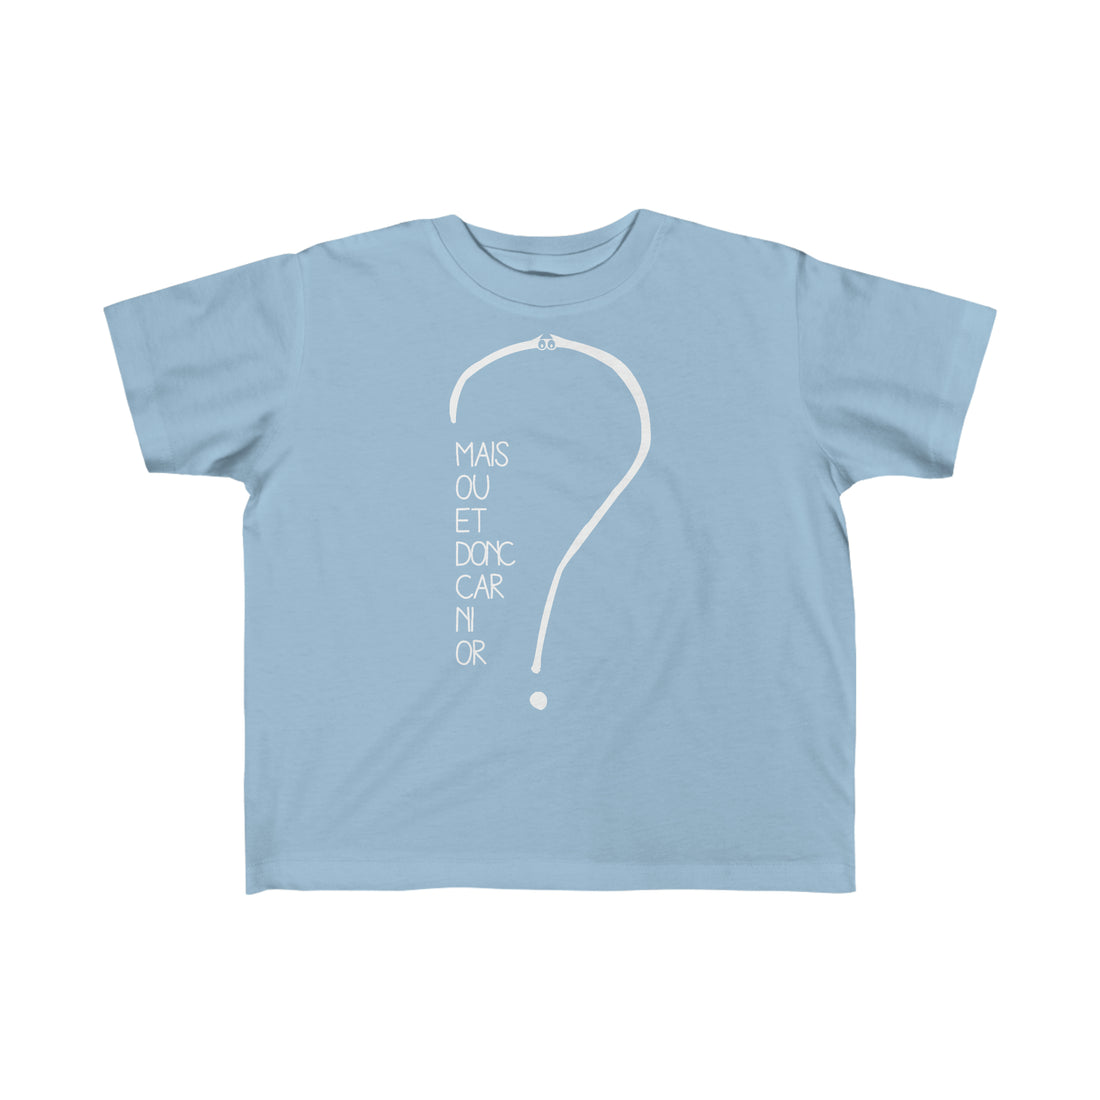 T-shirt pour bambin - Mais où et donc car ni or